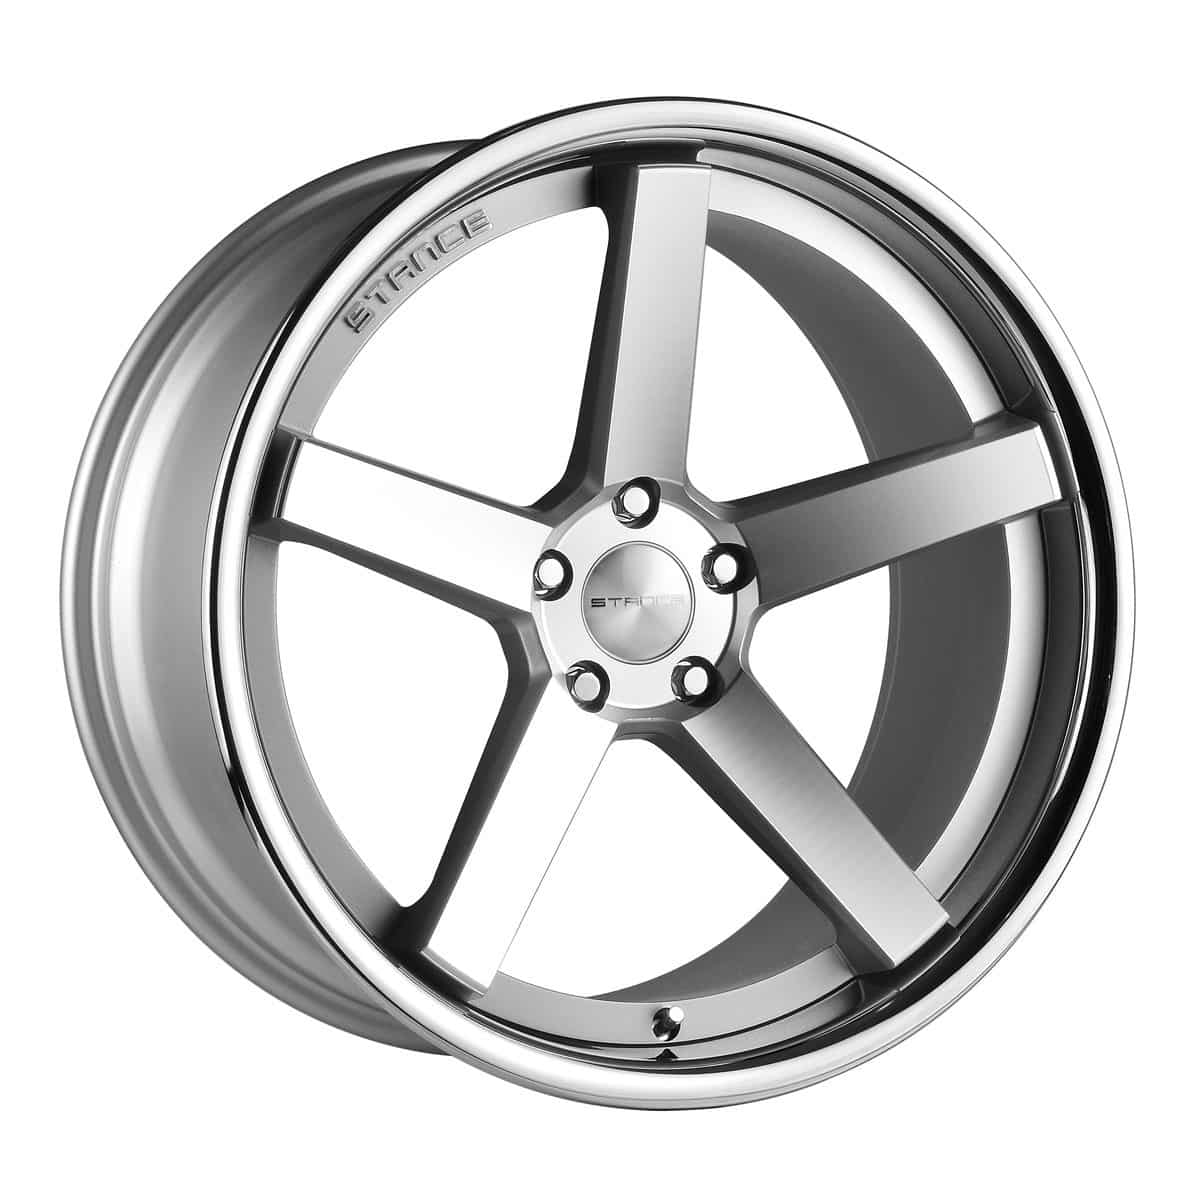 Stance Wheels Logo - Stance SC5 | Stance SC5 Wheels | Stance SC5 Rims